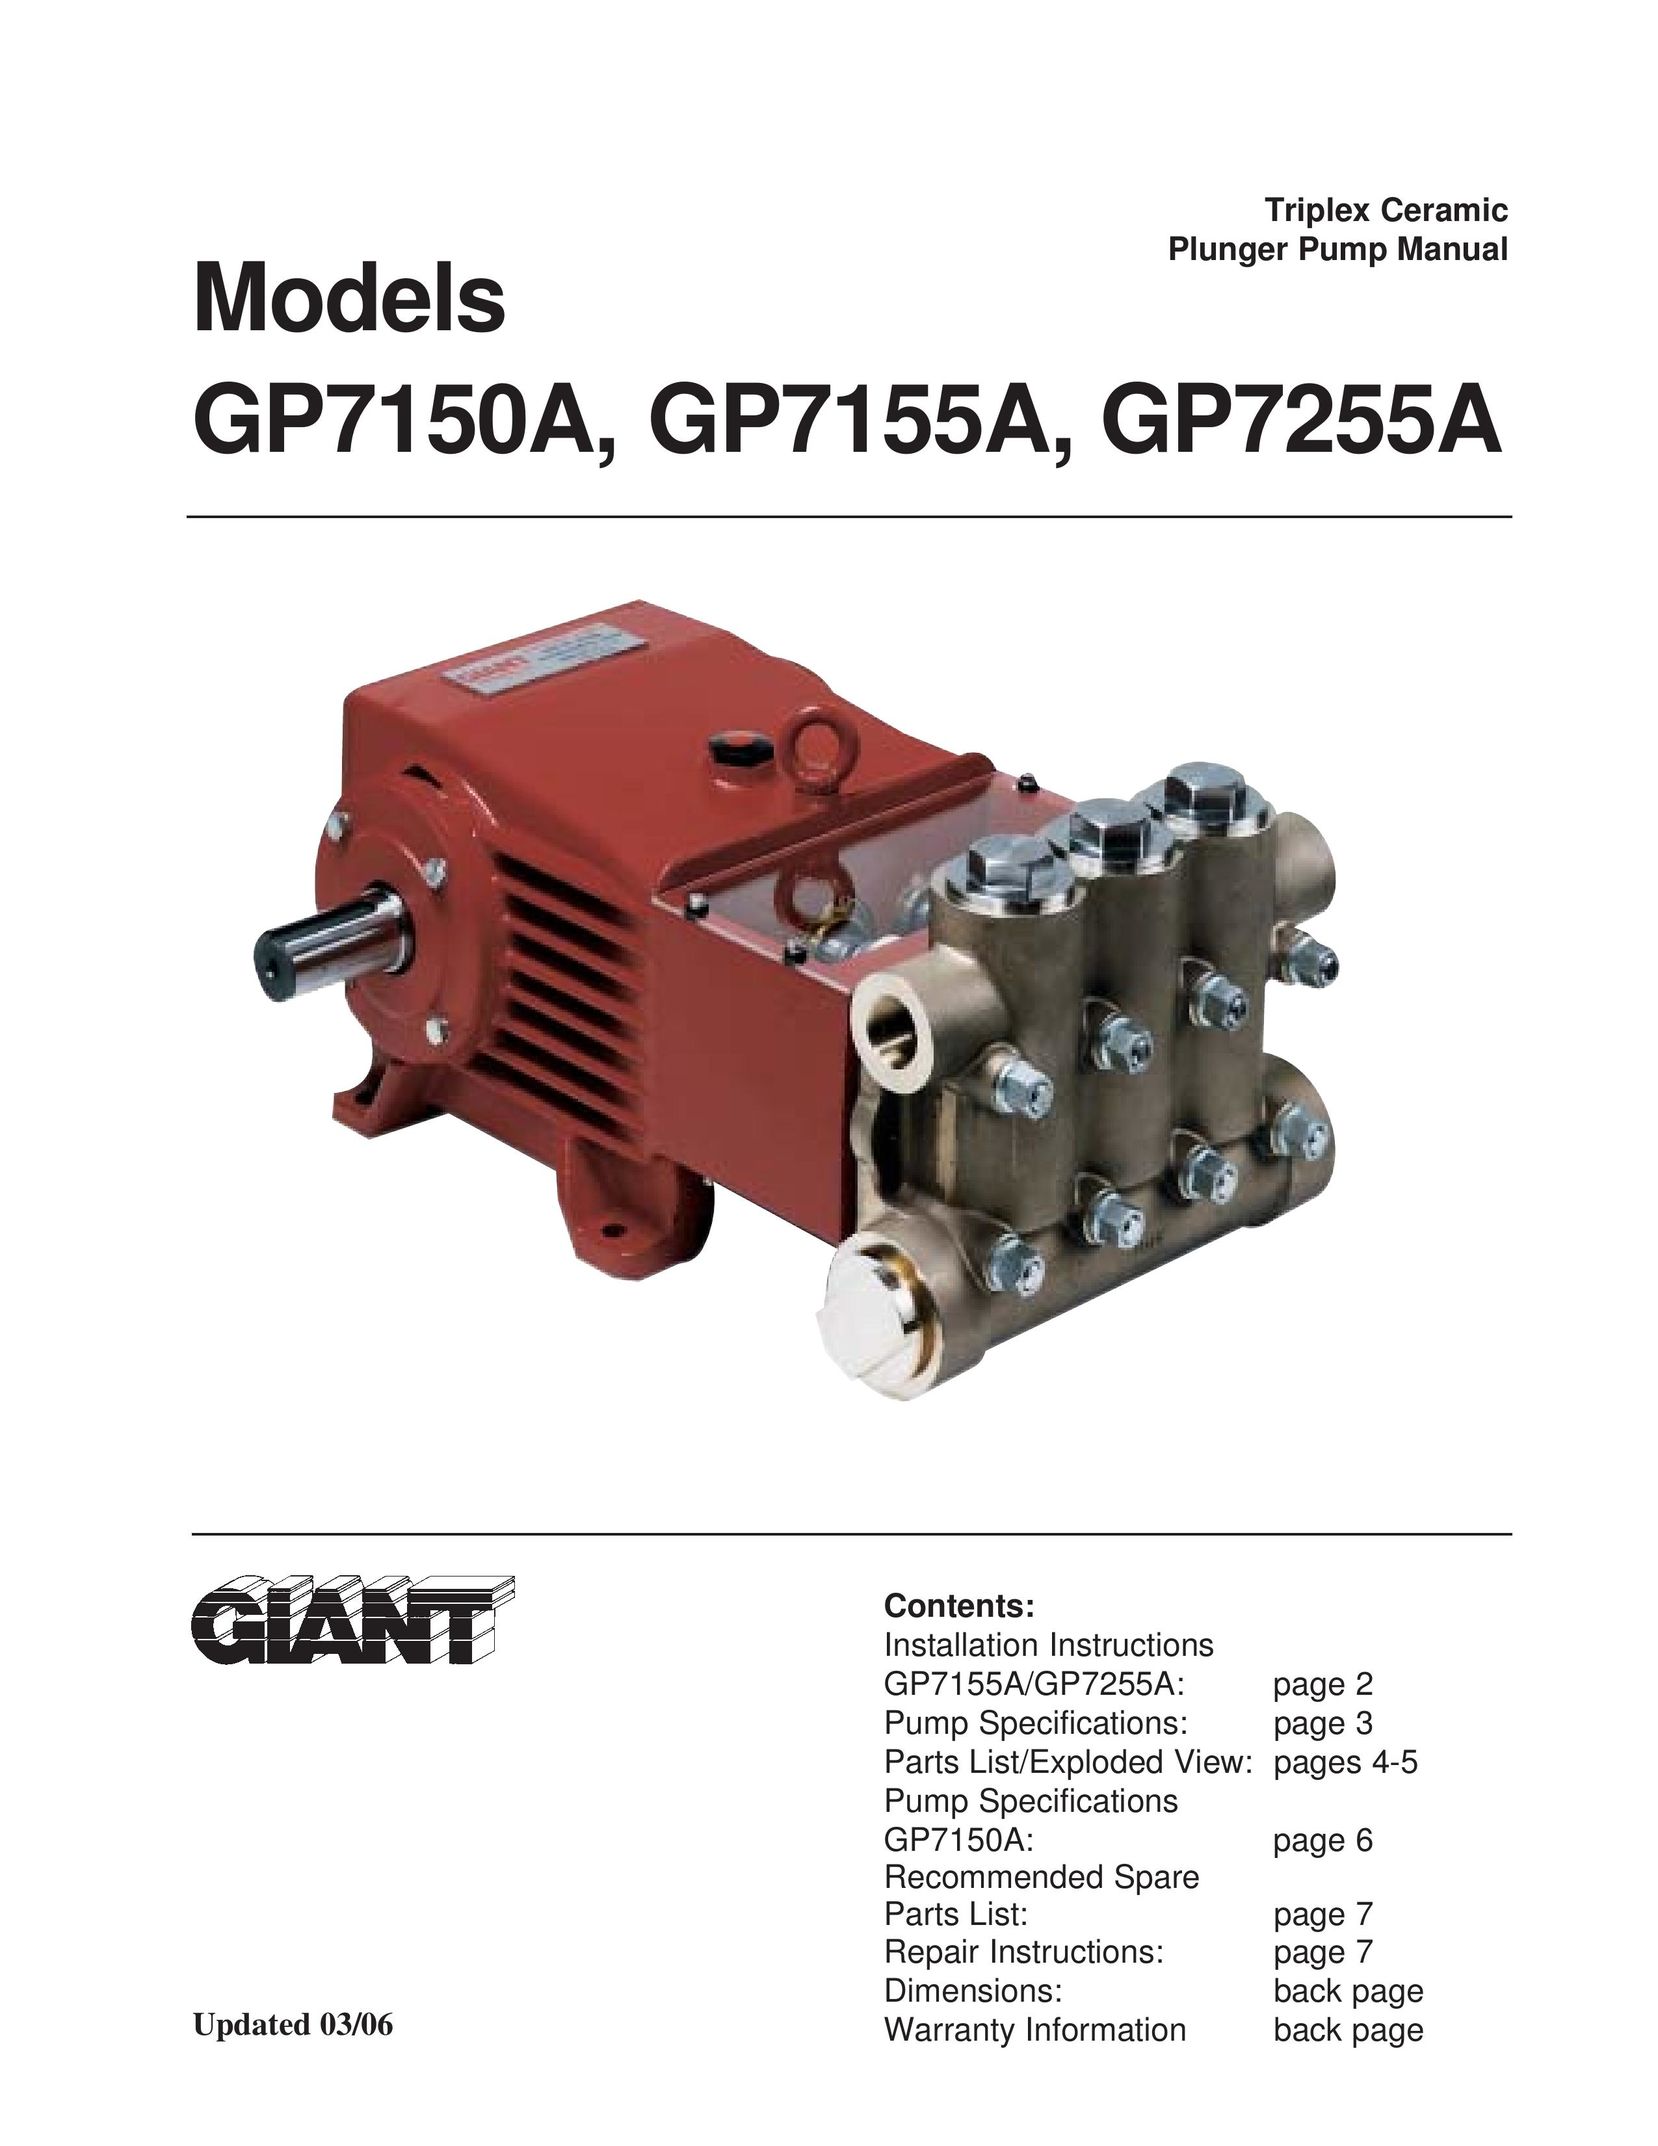 Giant GP7255A Water Pump User Manual